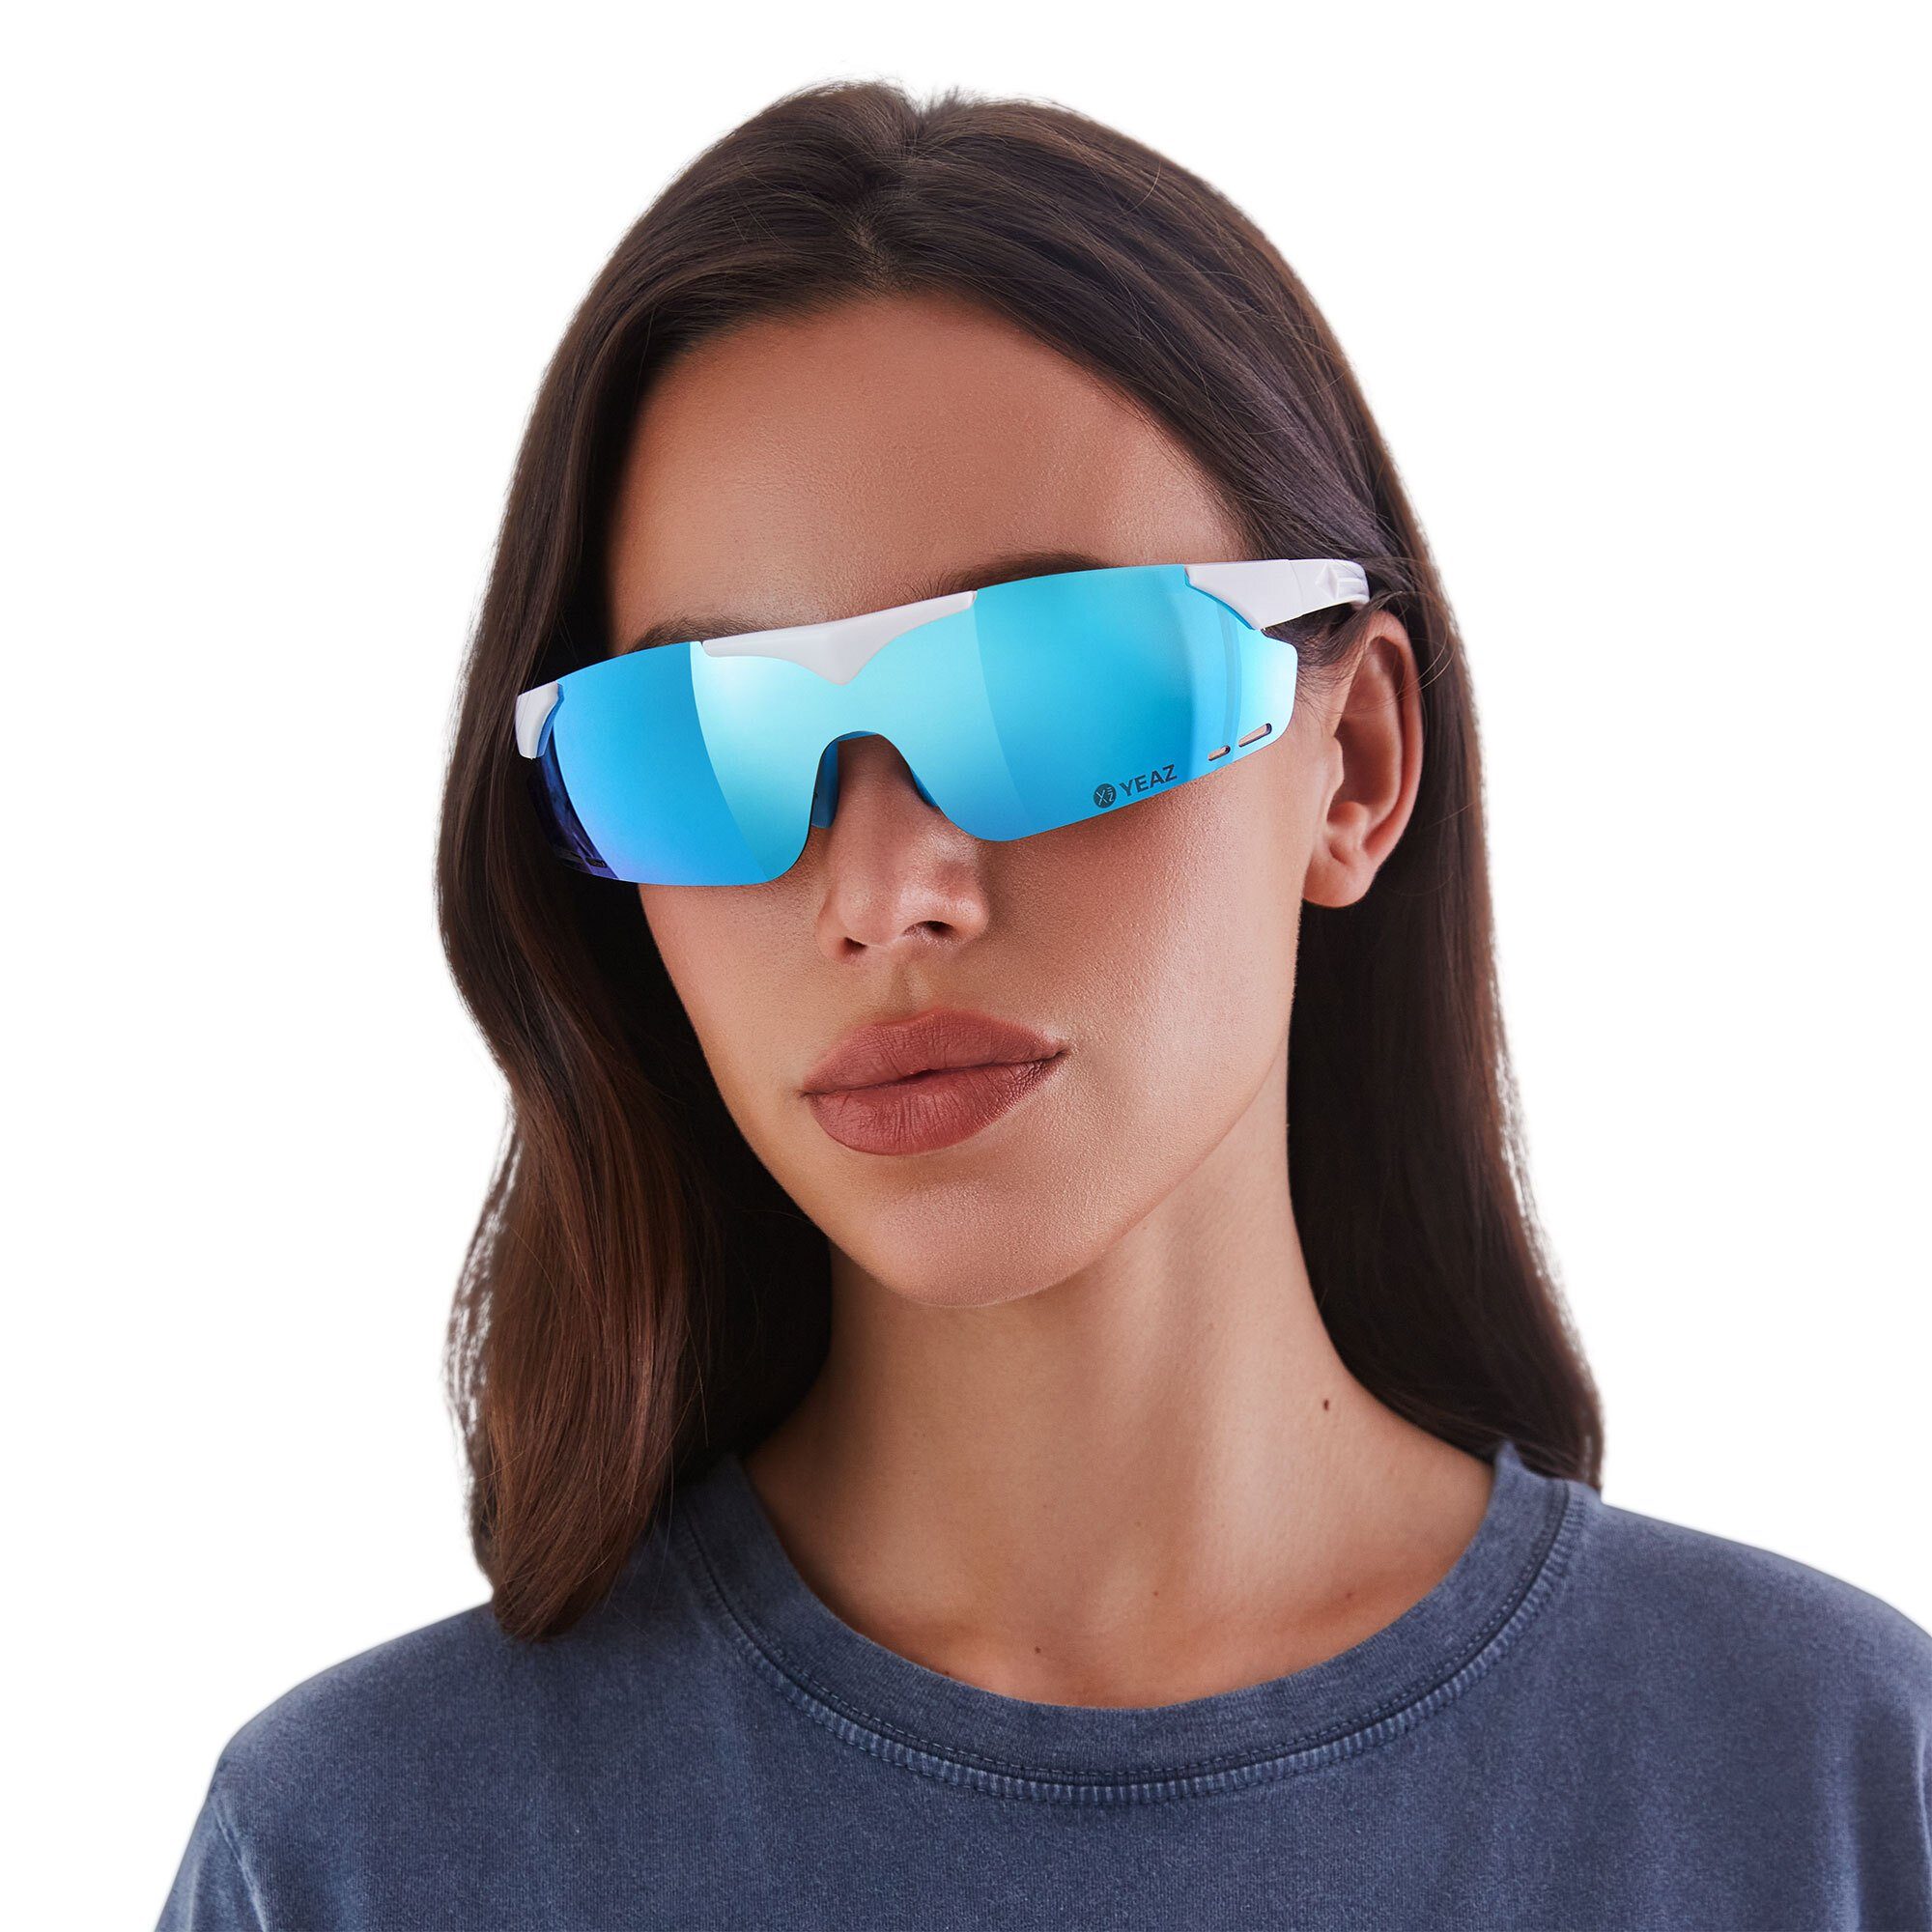 Sport-Sonnenbrille Magnetsystem magnet-sport-sonnenbrille, YEAZ SUNUP Sportbrille mit